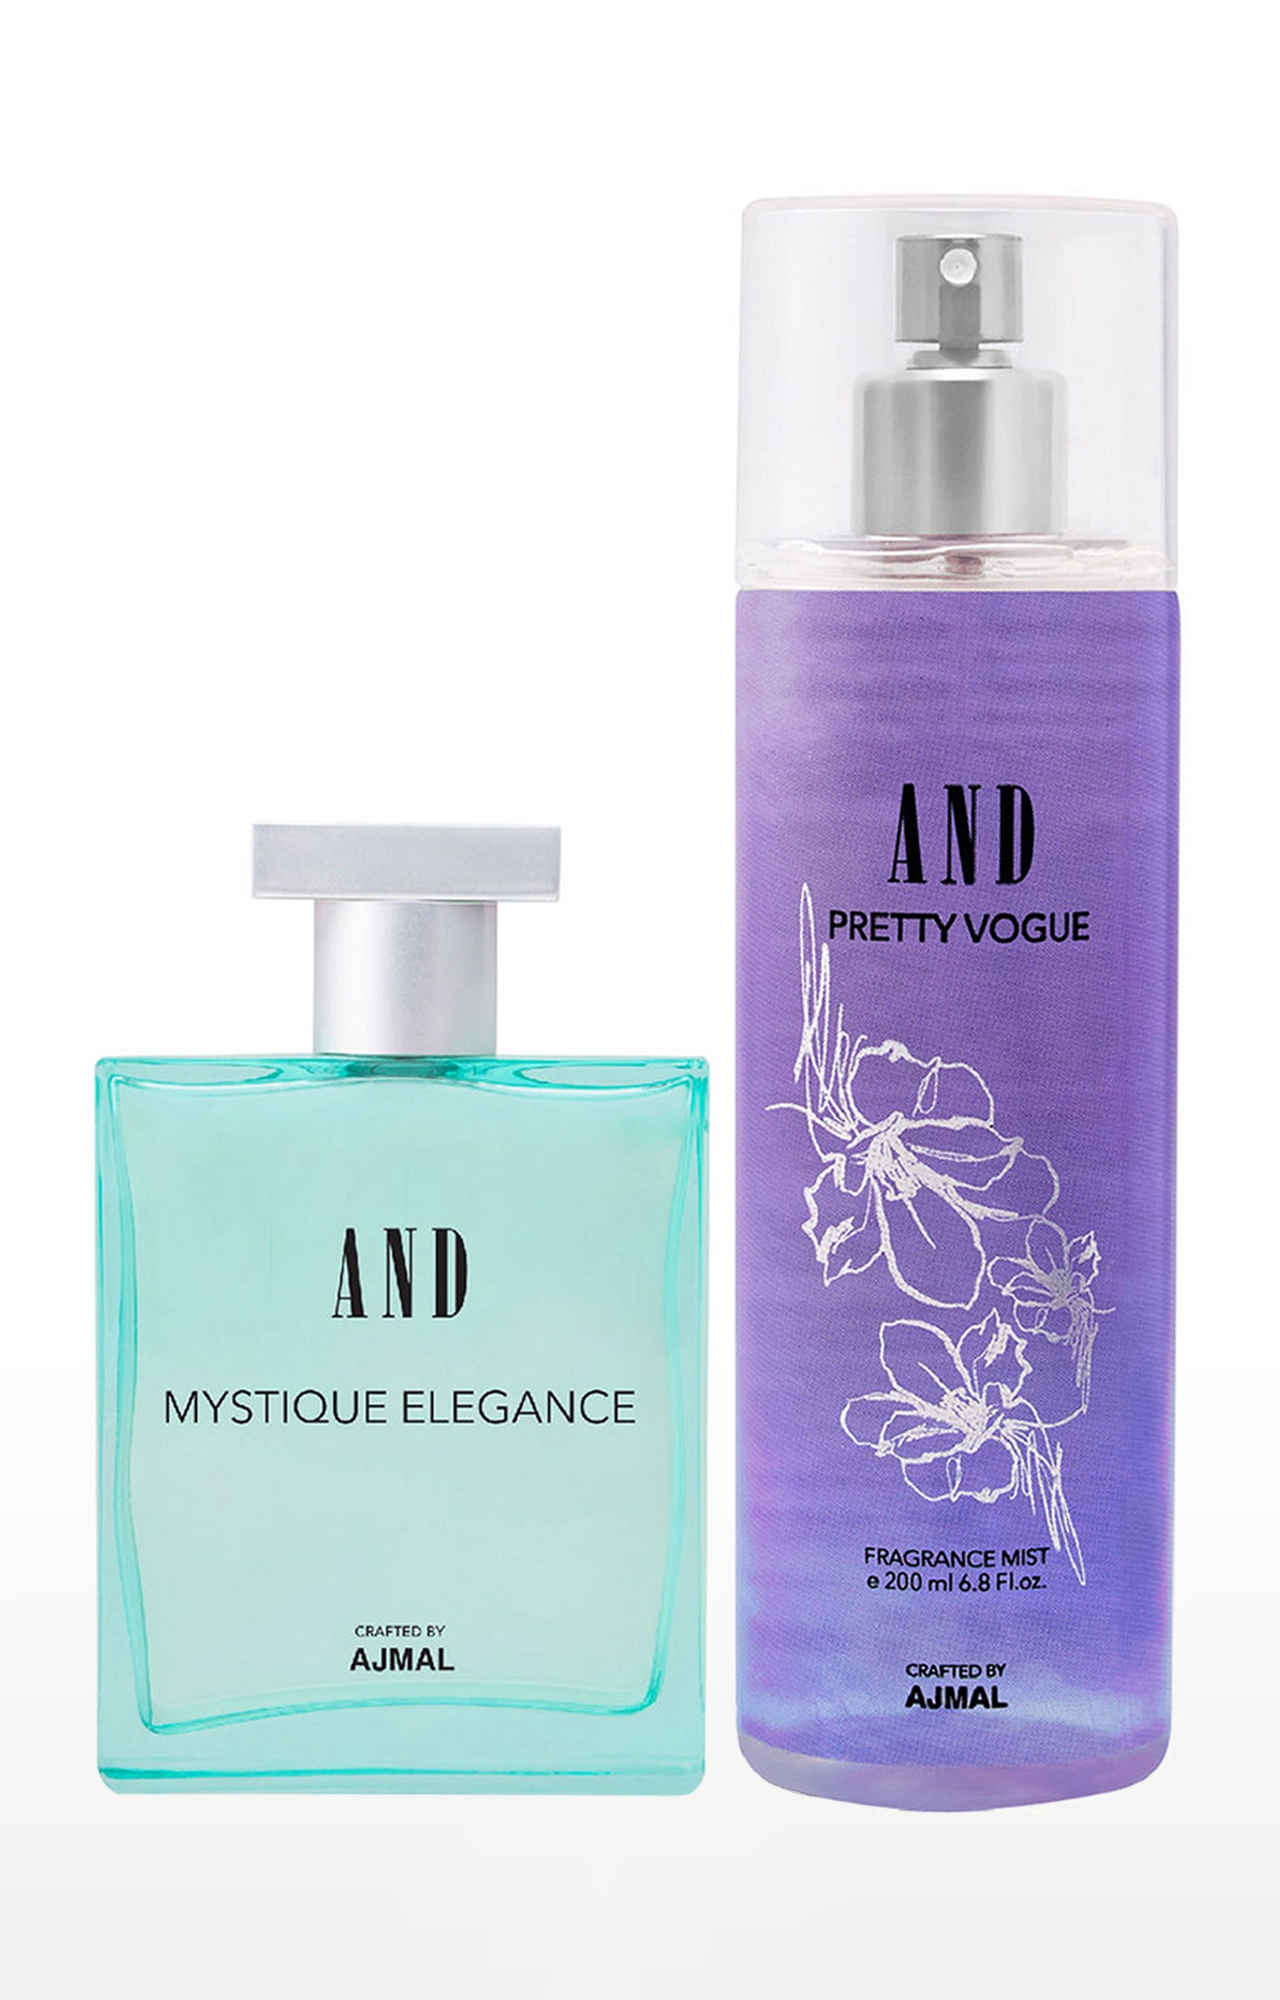 AND Mystique Elegance Eau De Parfum 50ML & Pretty Vogue Body Mist 200ML Pack of 2 for Women Crafted by Ajmal 